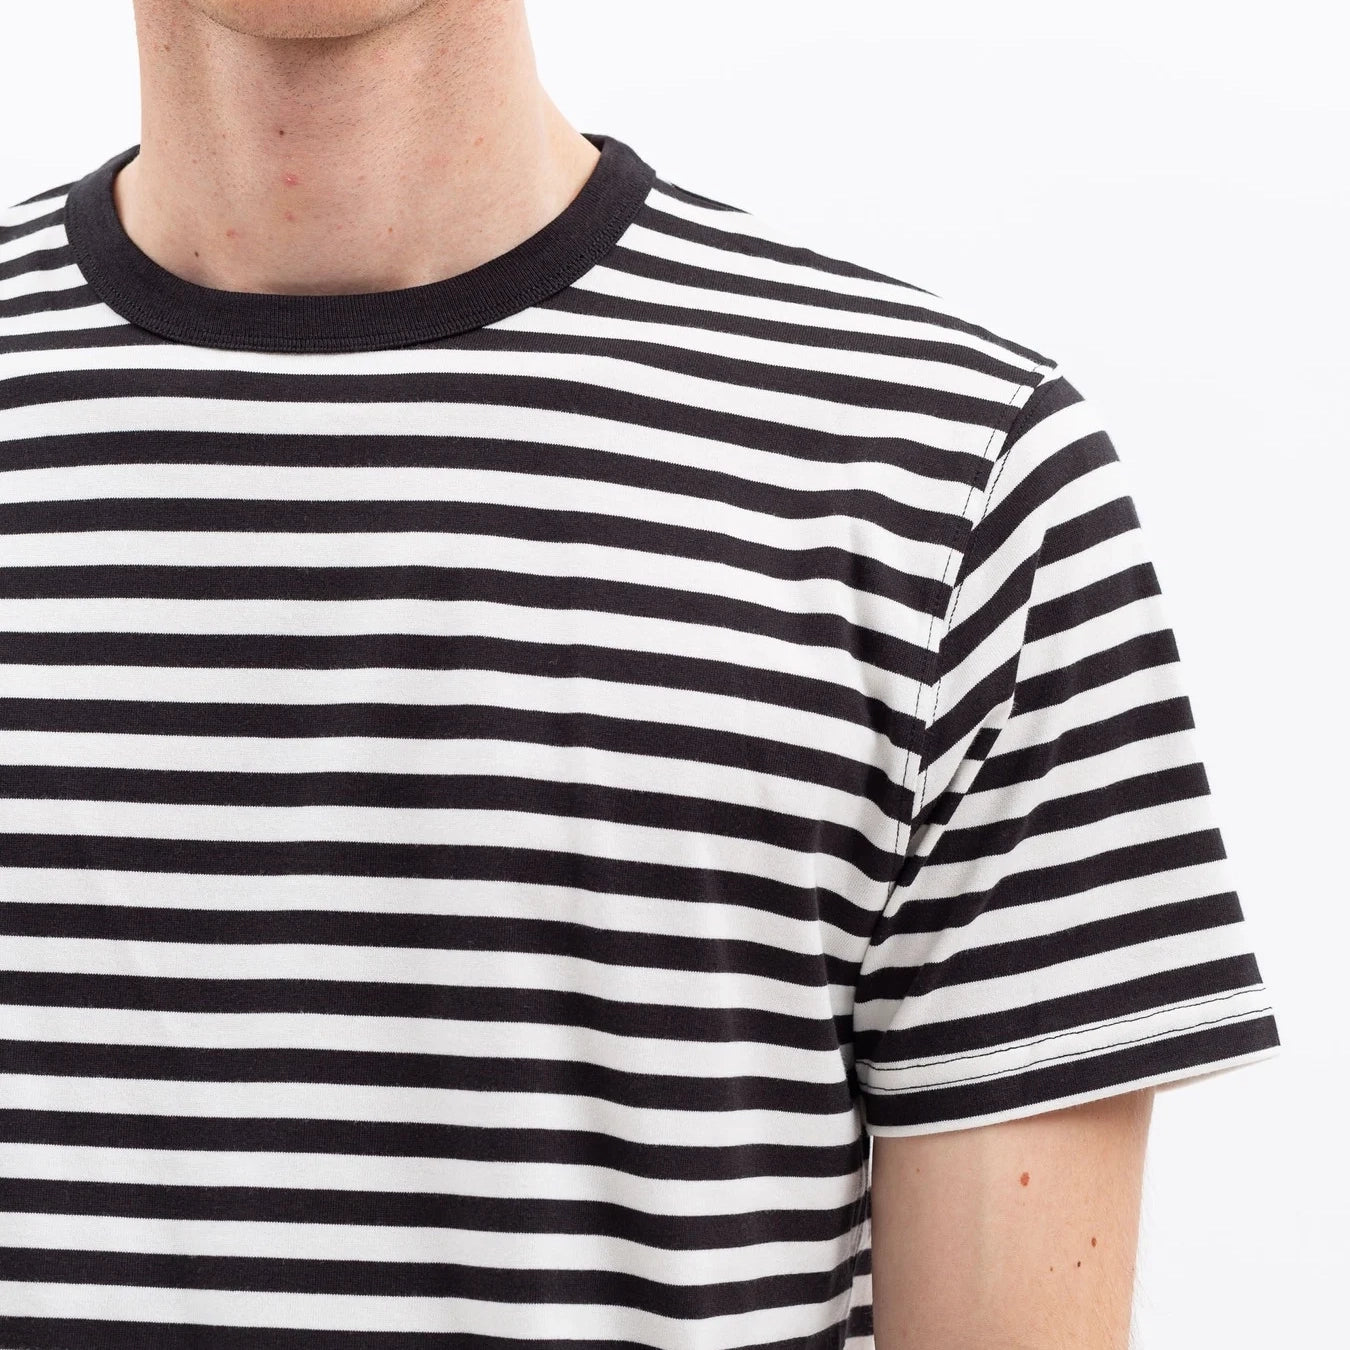 Niels Classic Stripe T-Shirt - Black & White